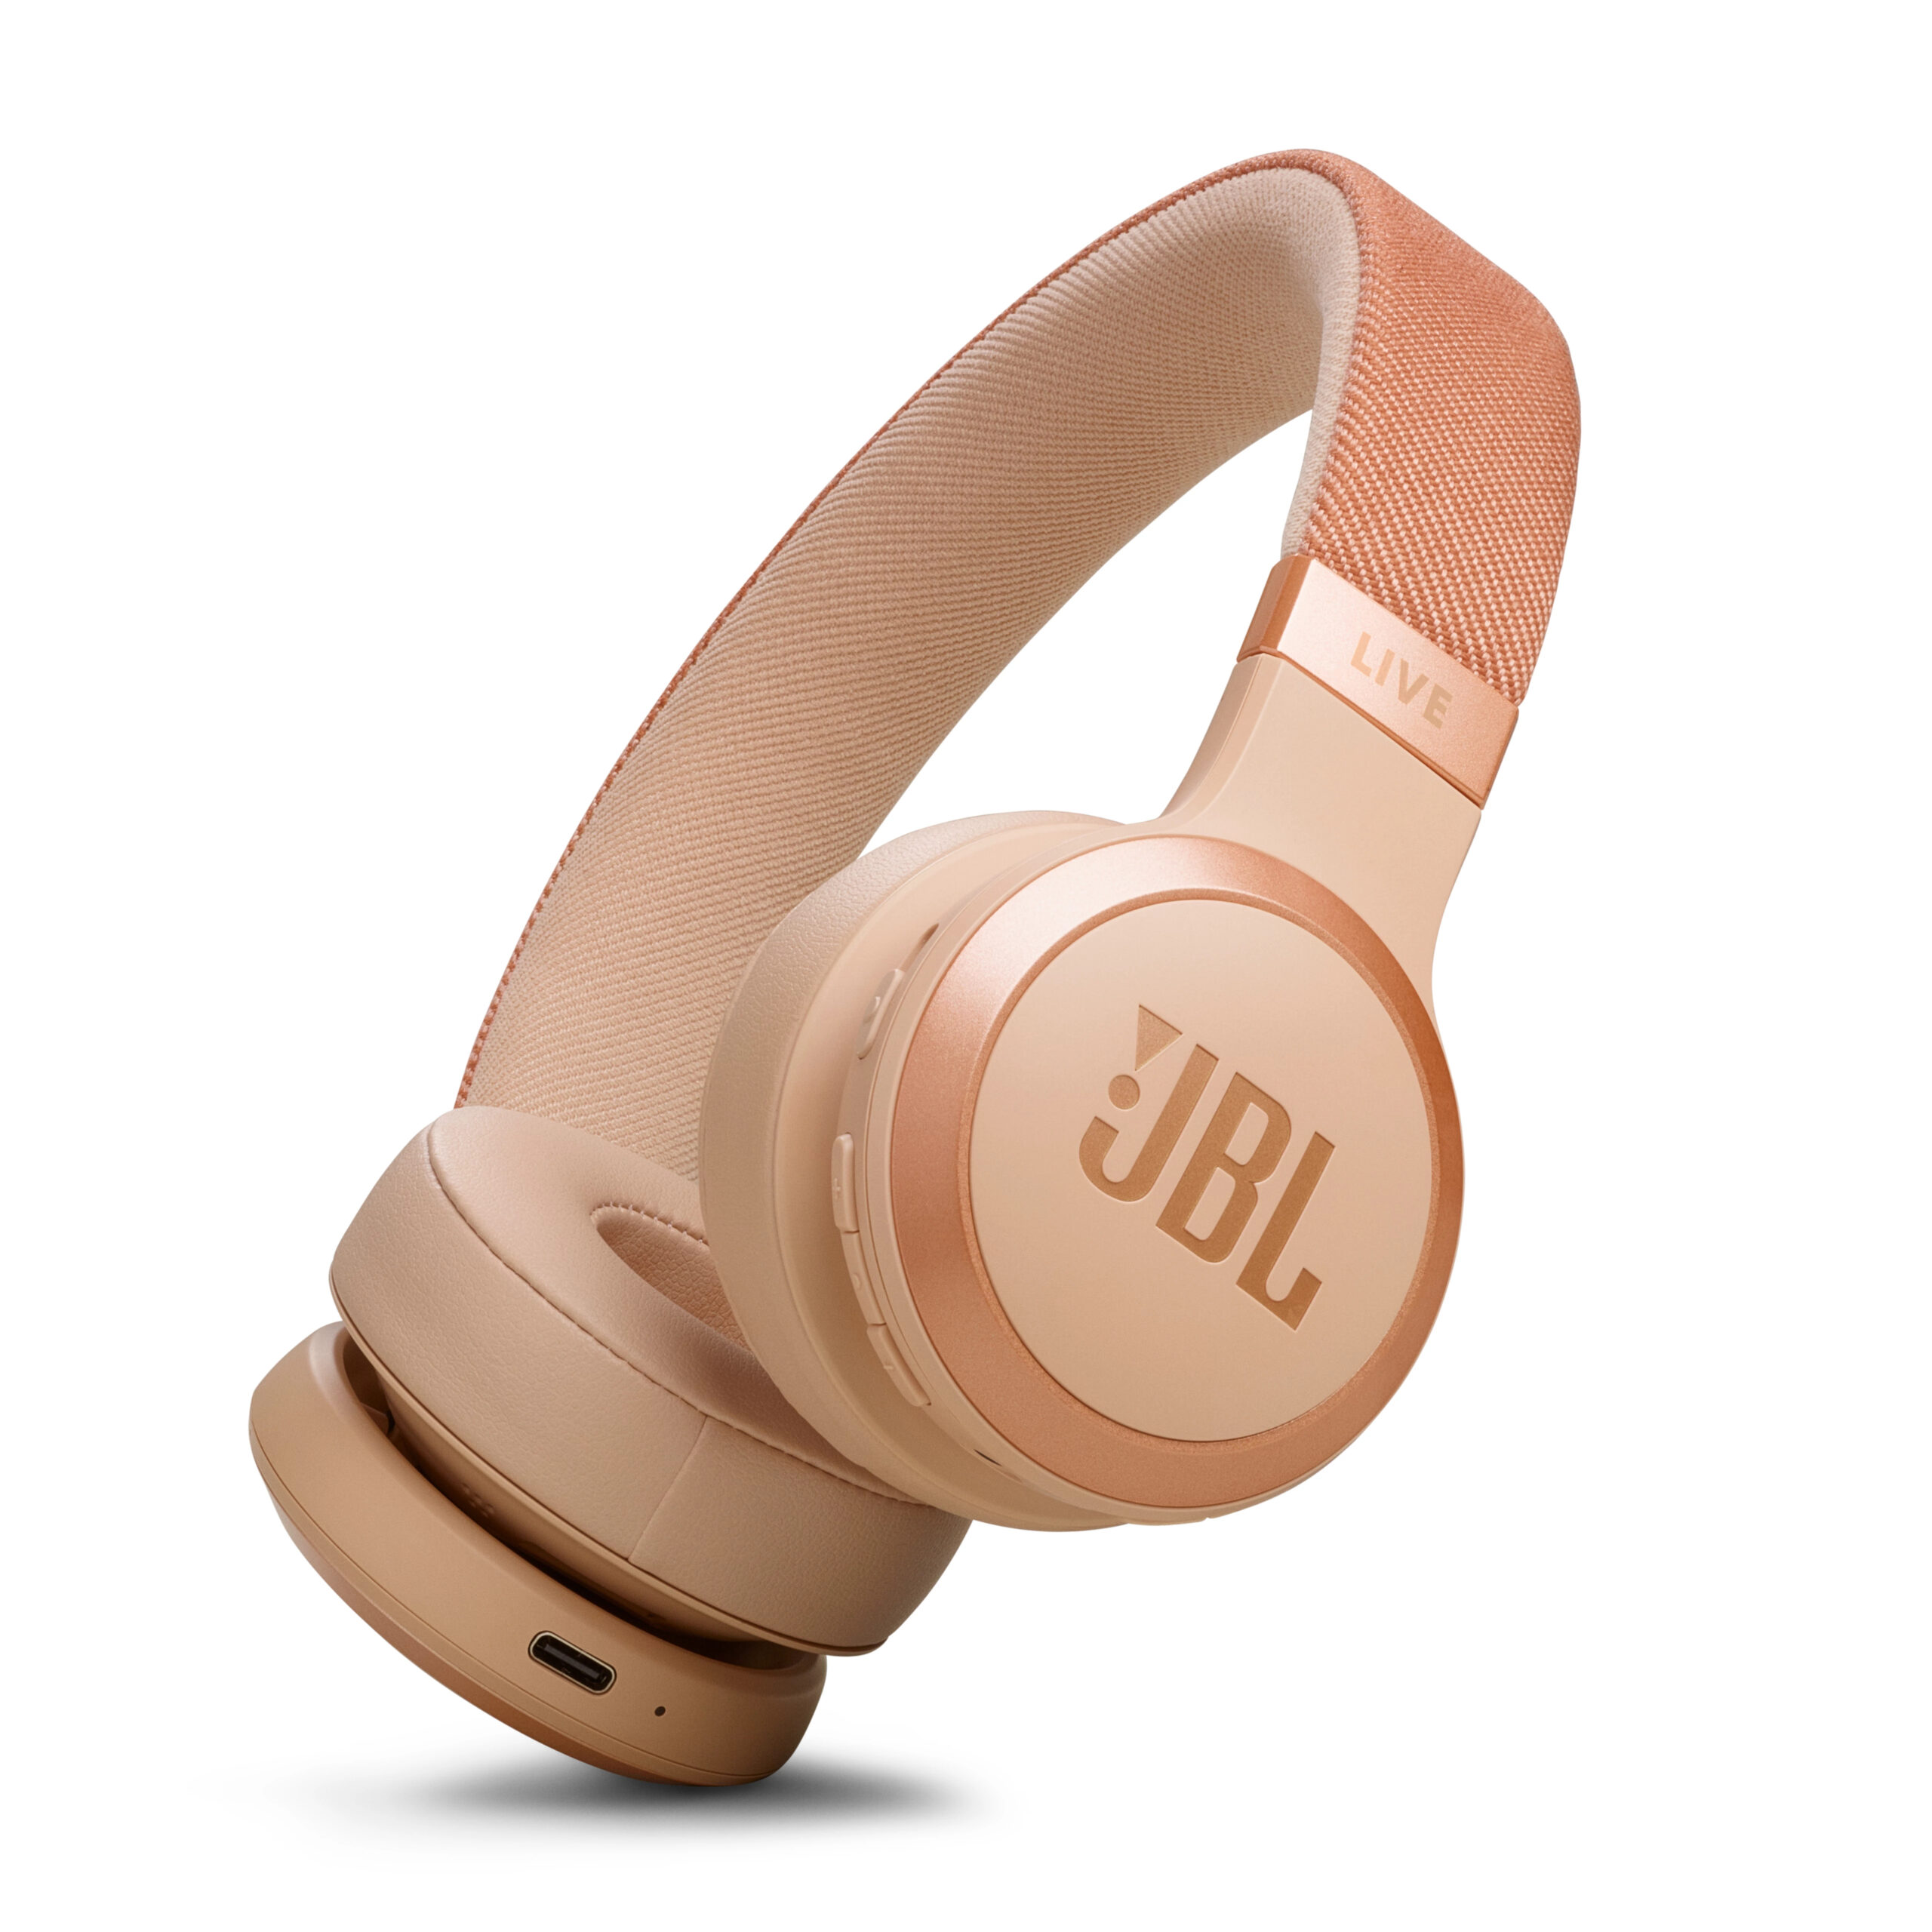 Live JBL 670NC Live launched headphones 770NC and